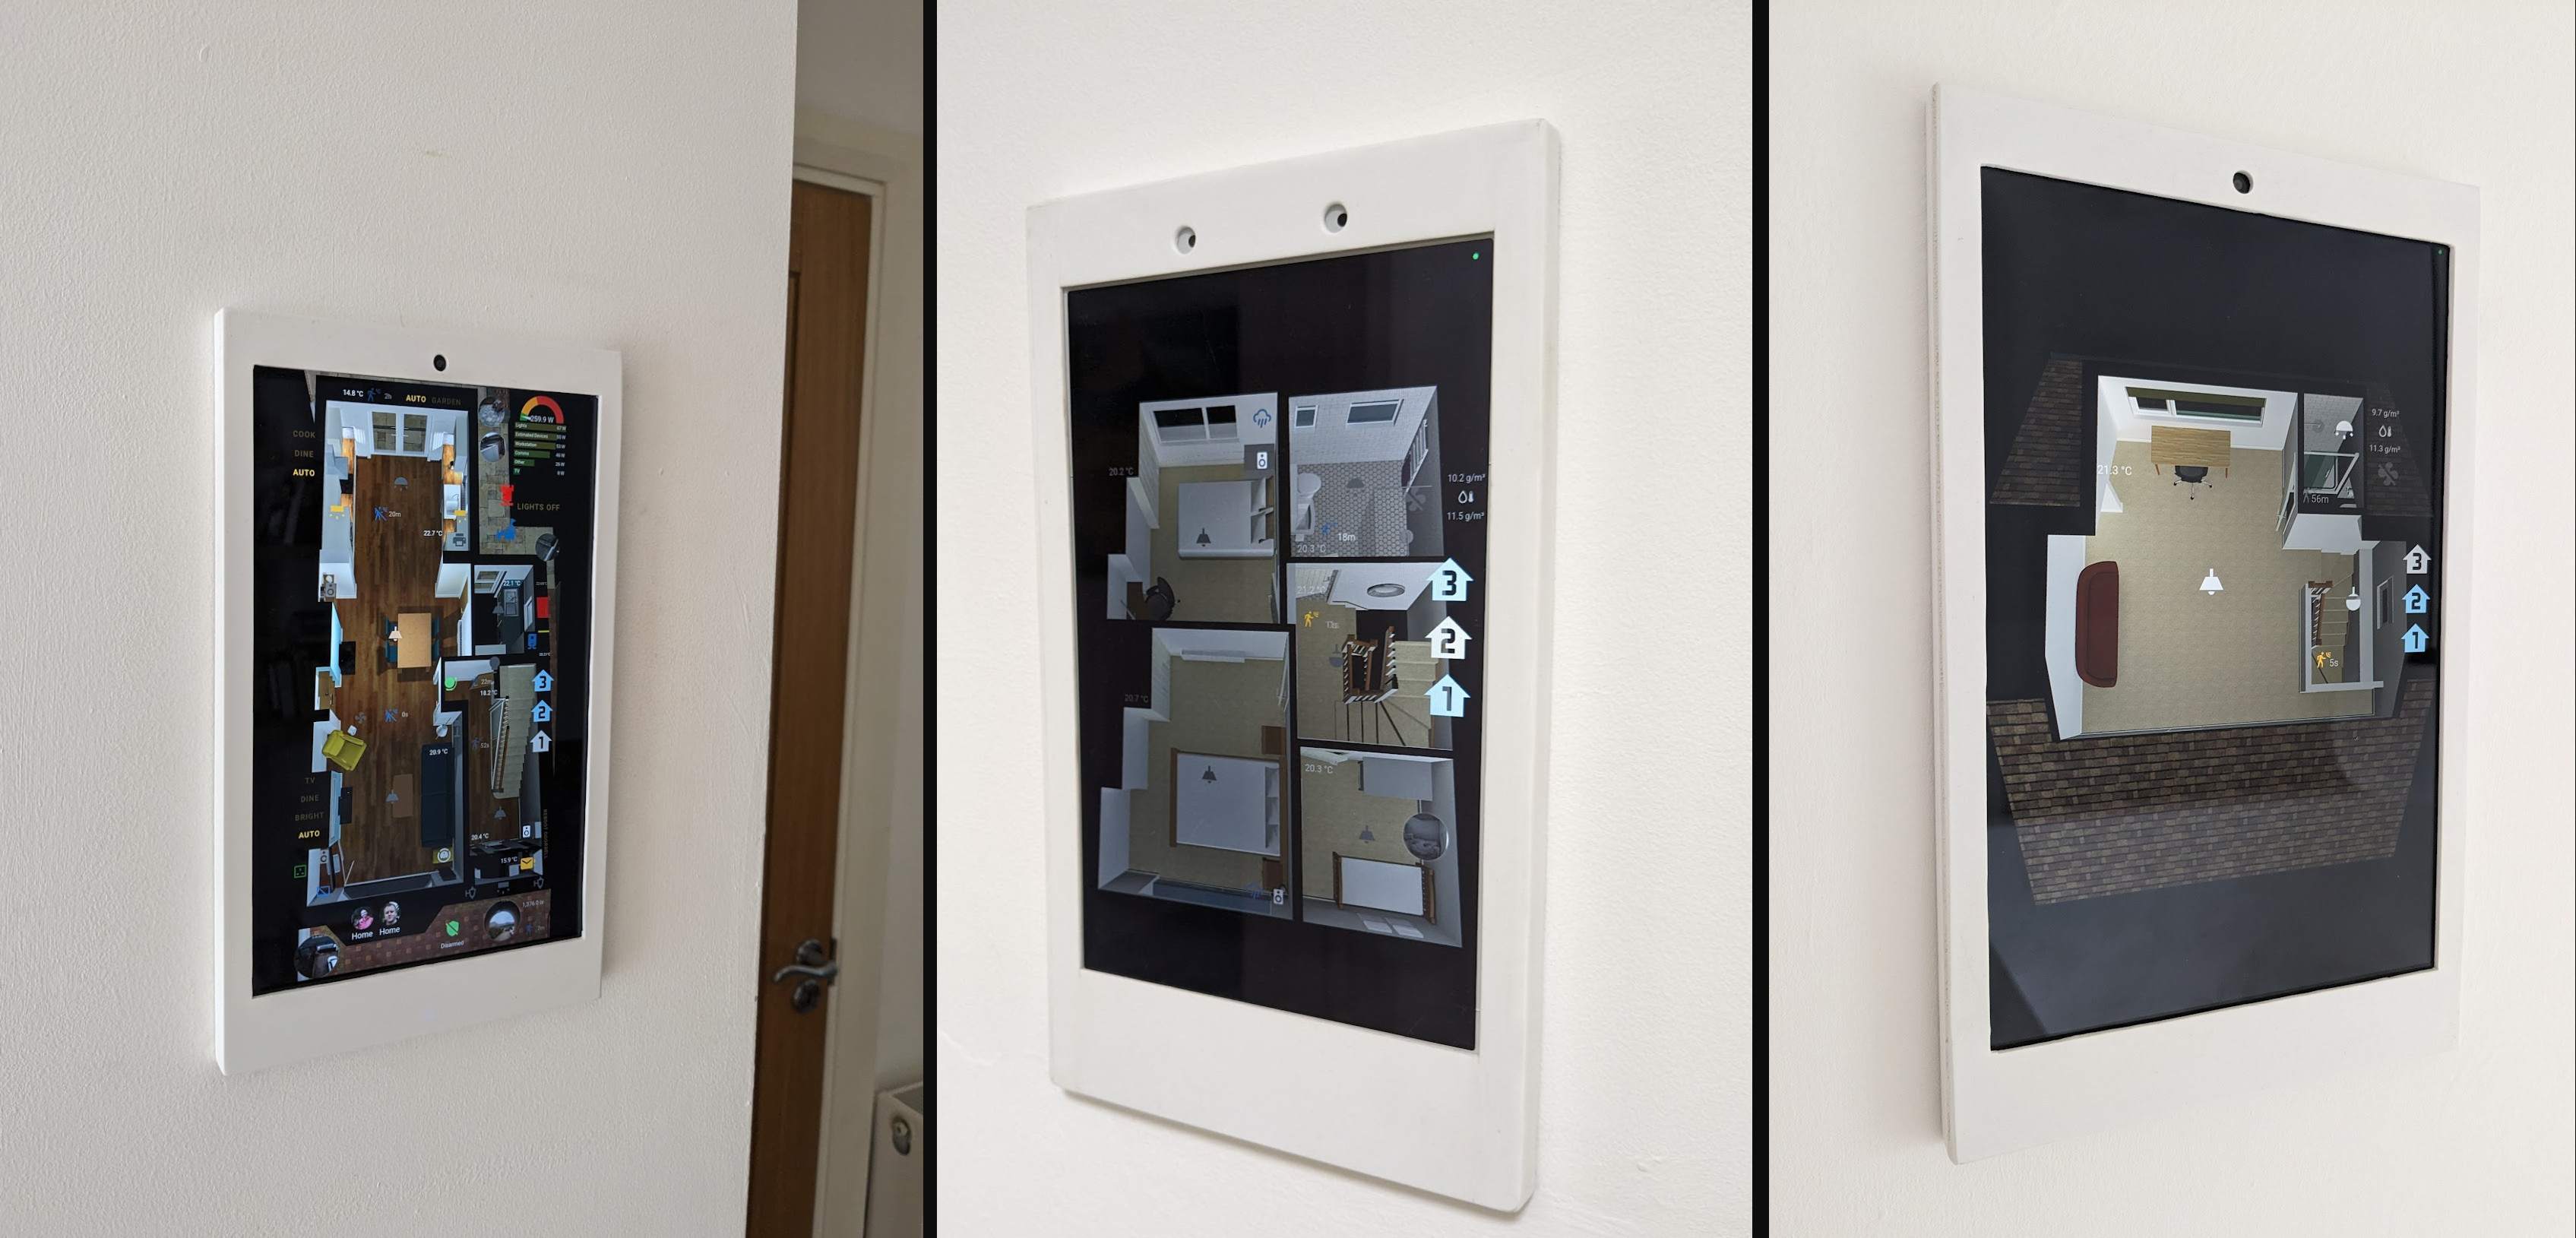 Various wall-mounted tablets displaying the floorplan UI